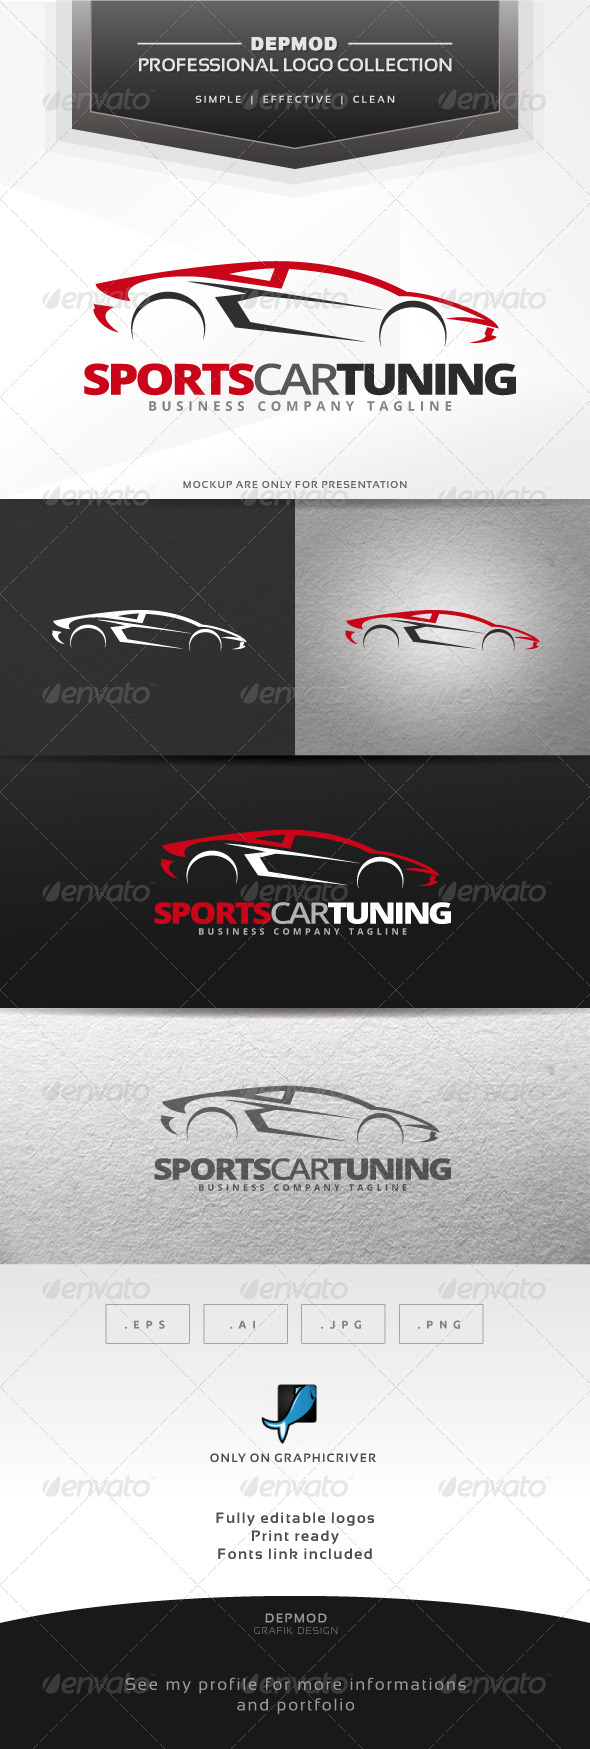 Sports Car Tuning Logo